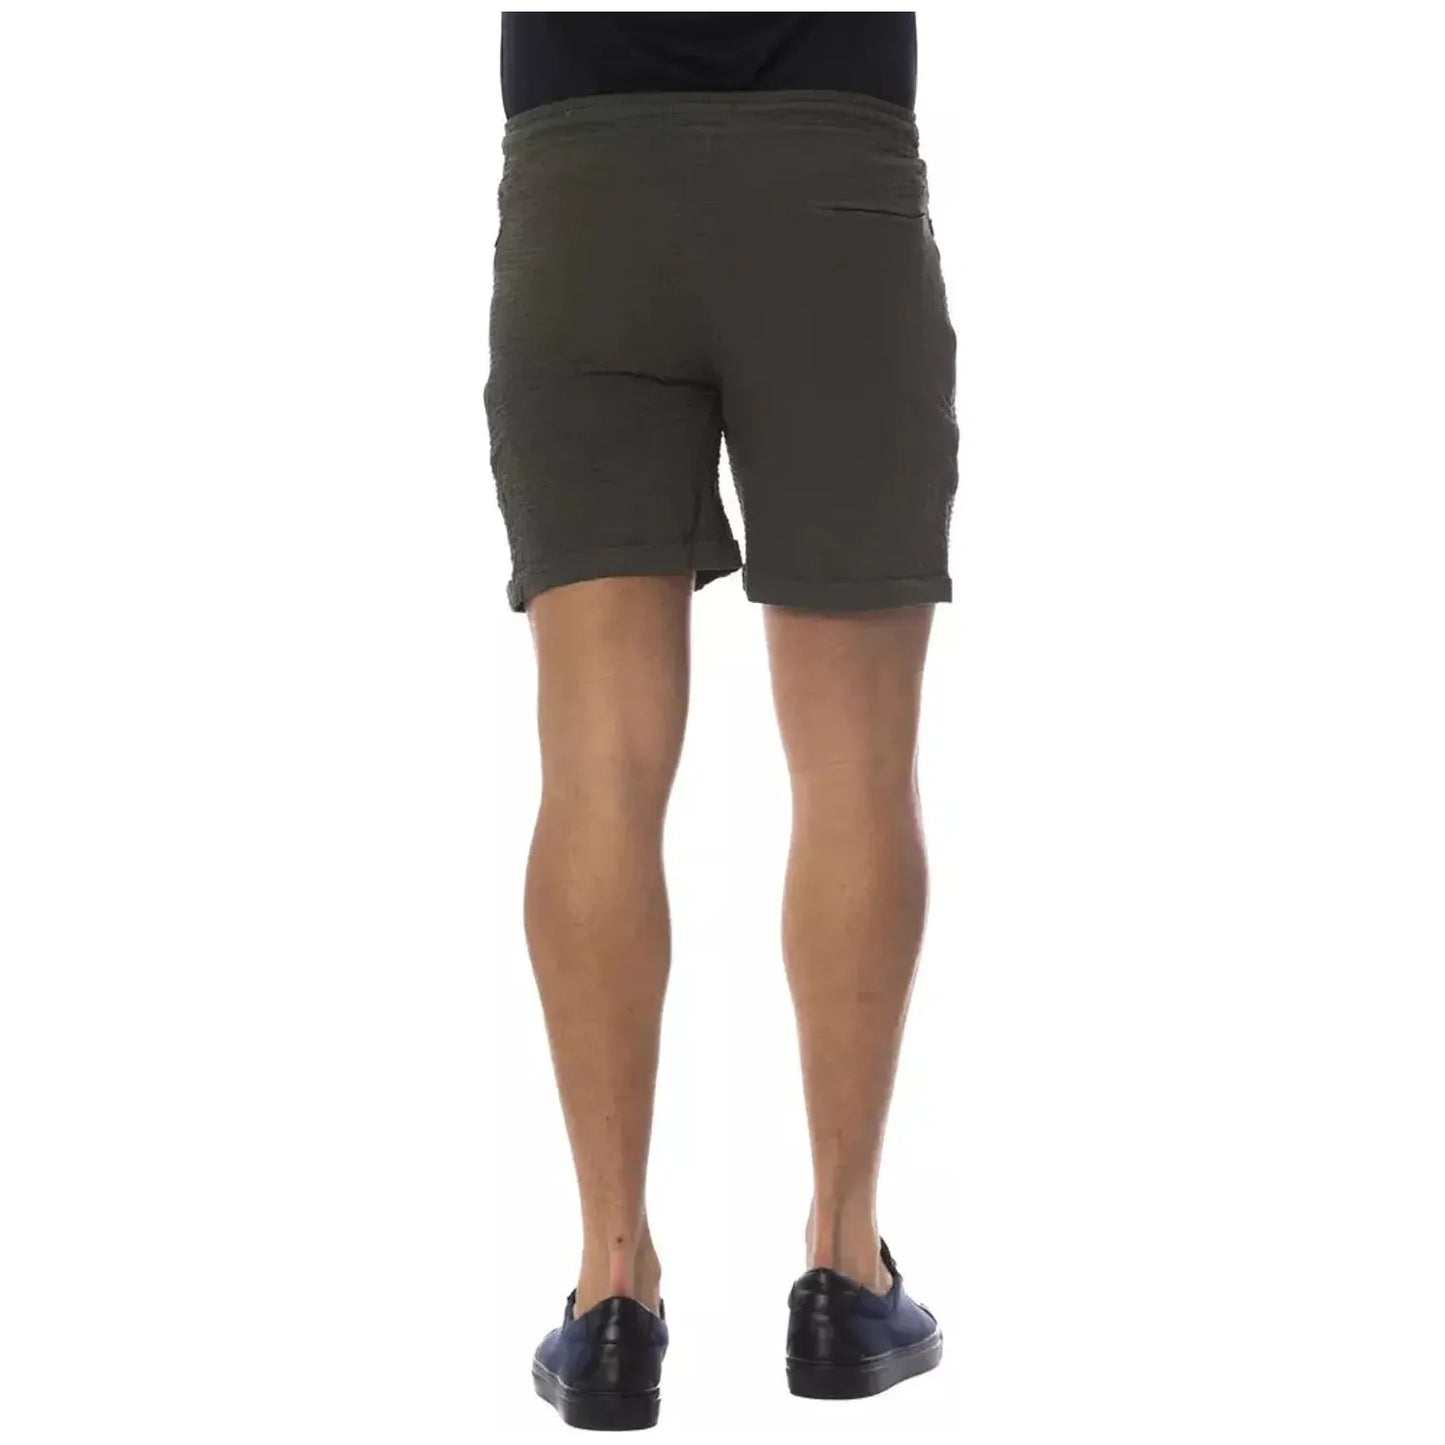 Verri Chic Army Casual Shorts for Men verdemilitare-short